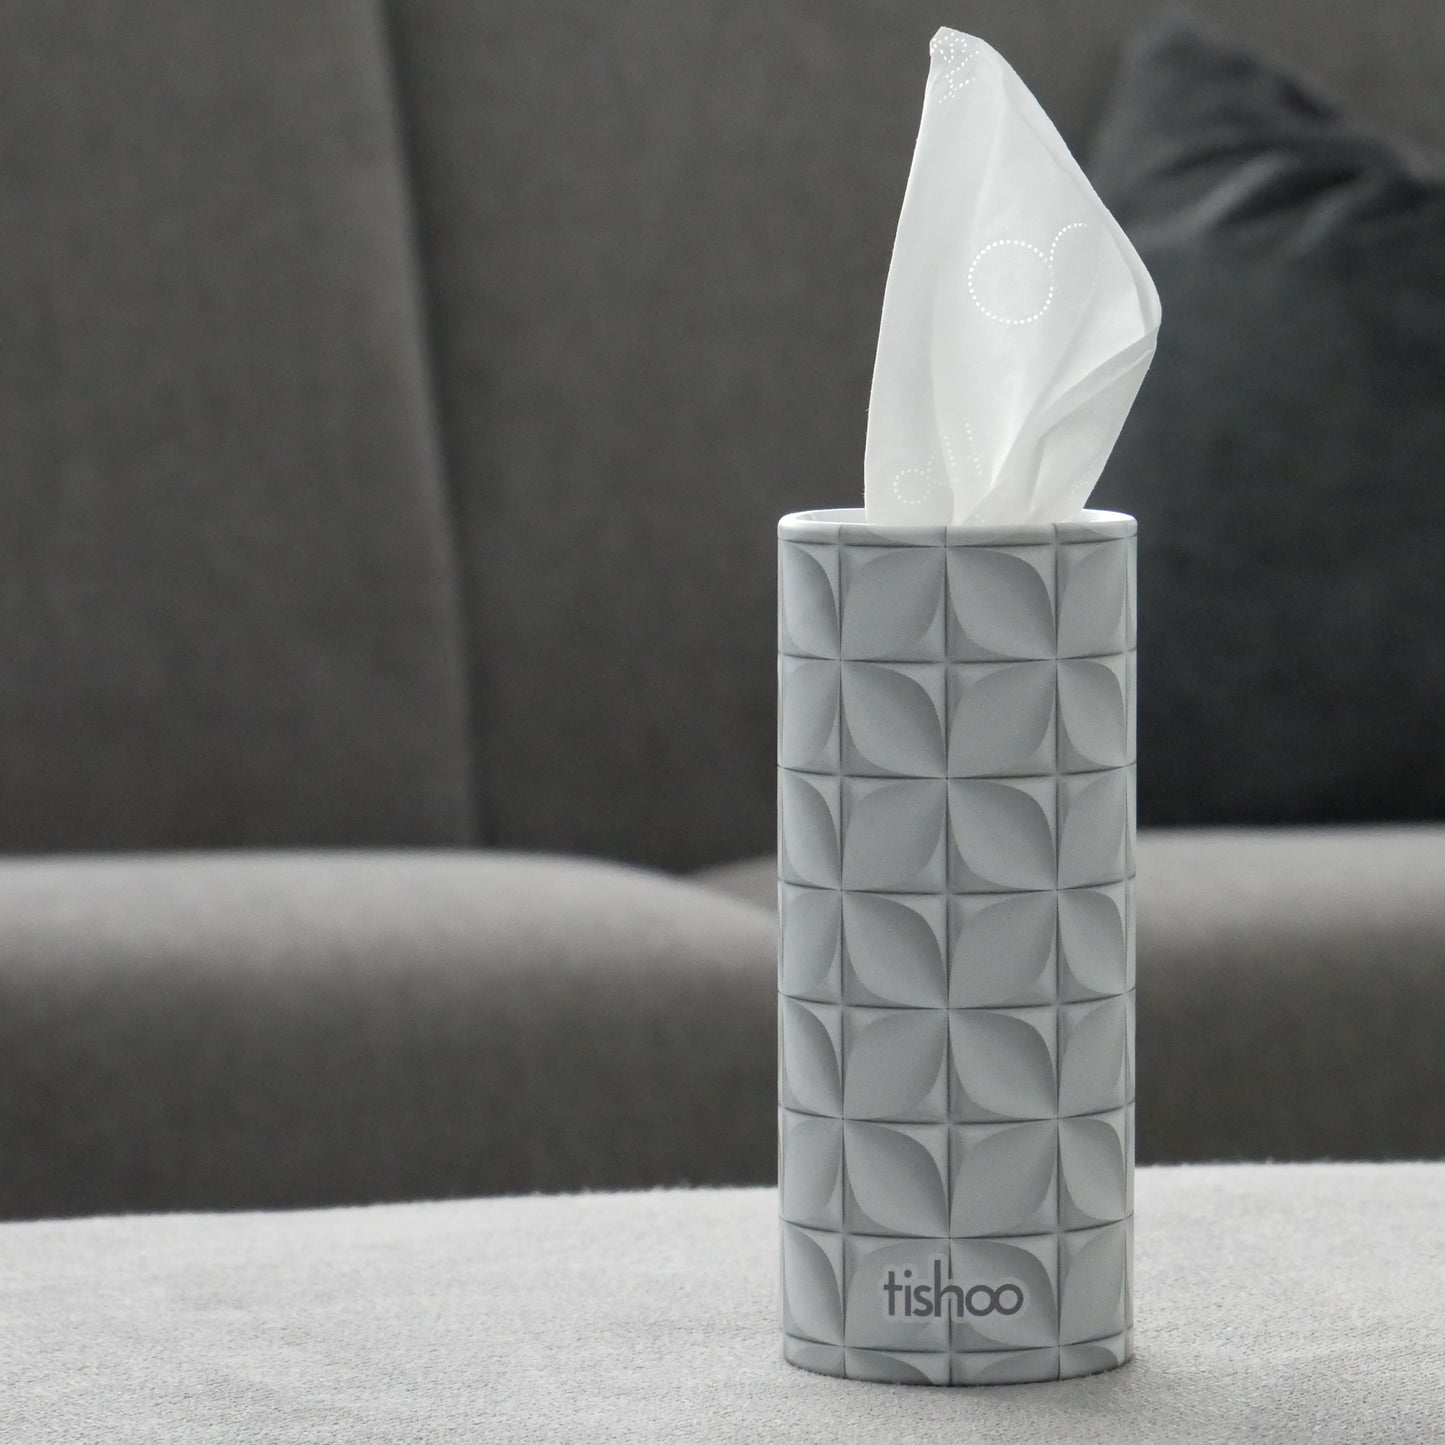 tishoo Luxury Tissues Grey/Tiles design in lounge